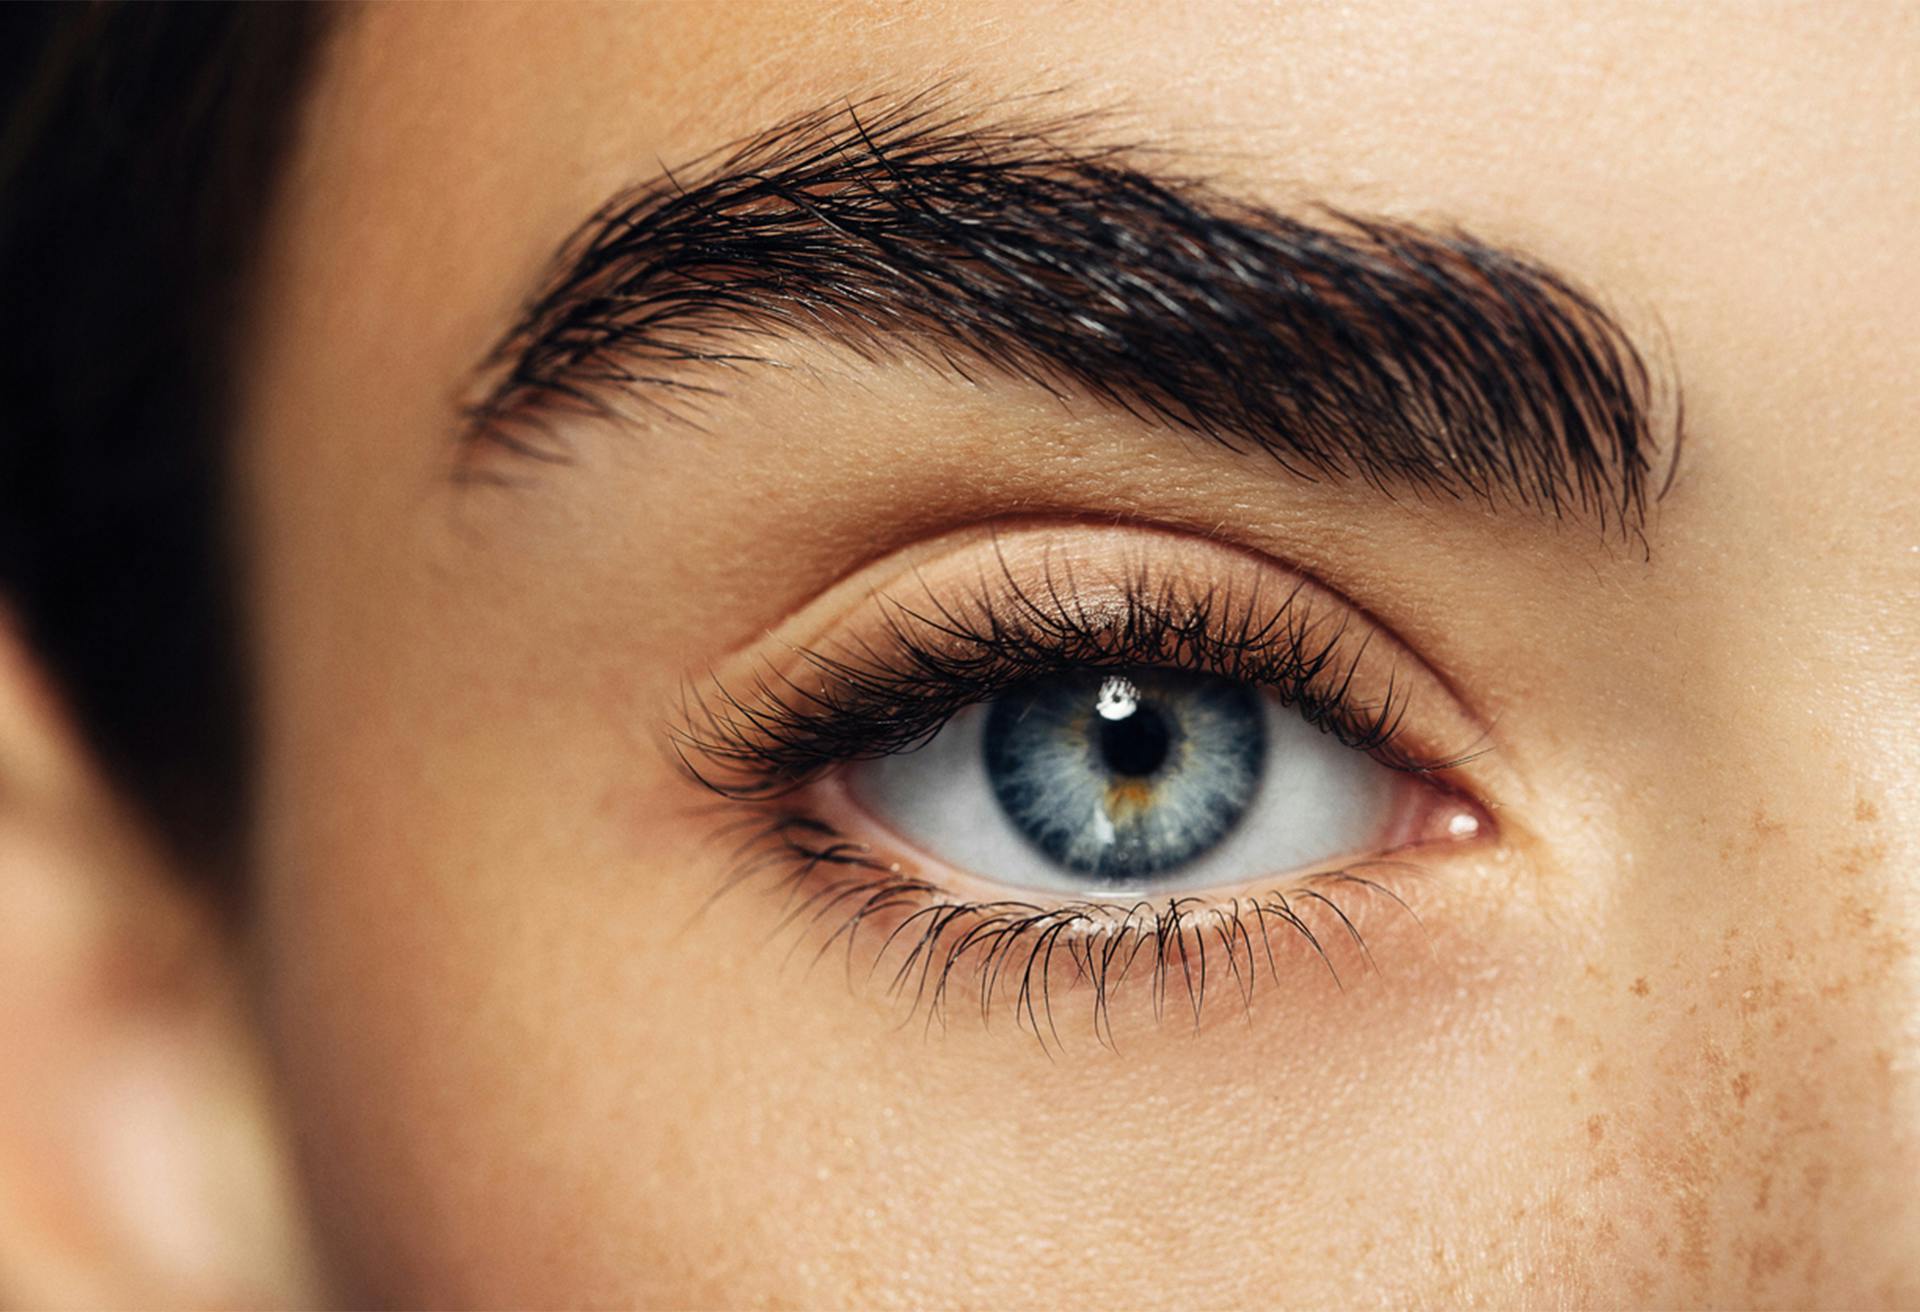 Woman's blue eye with thick dark eyebrow